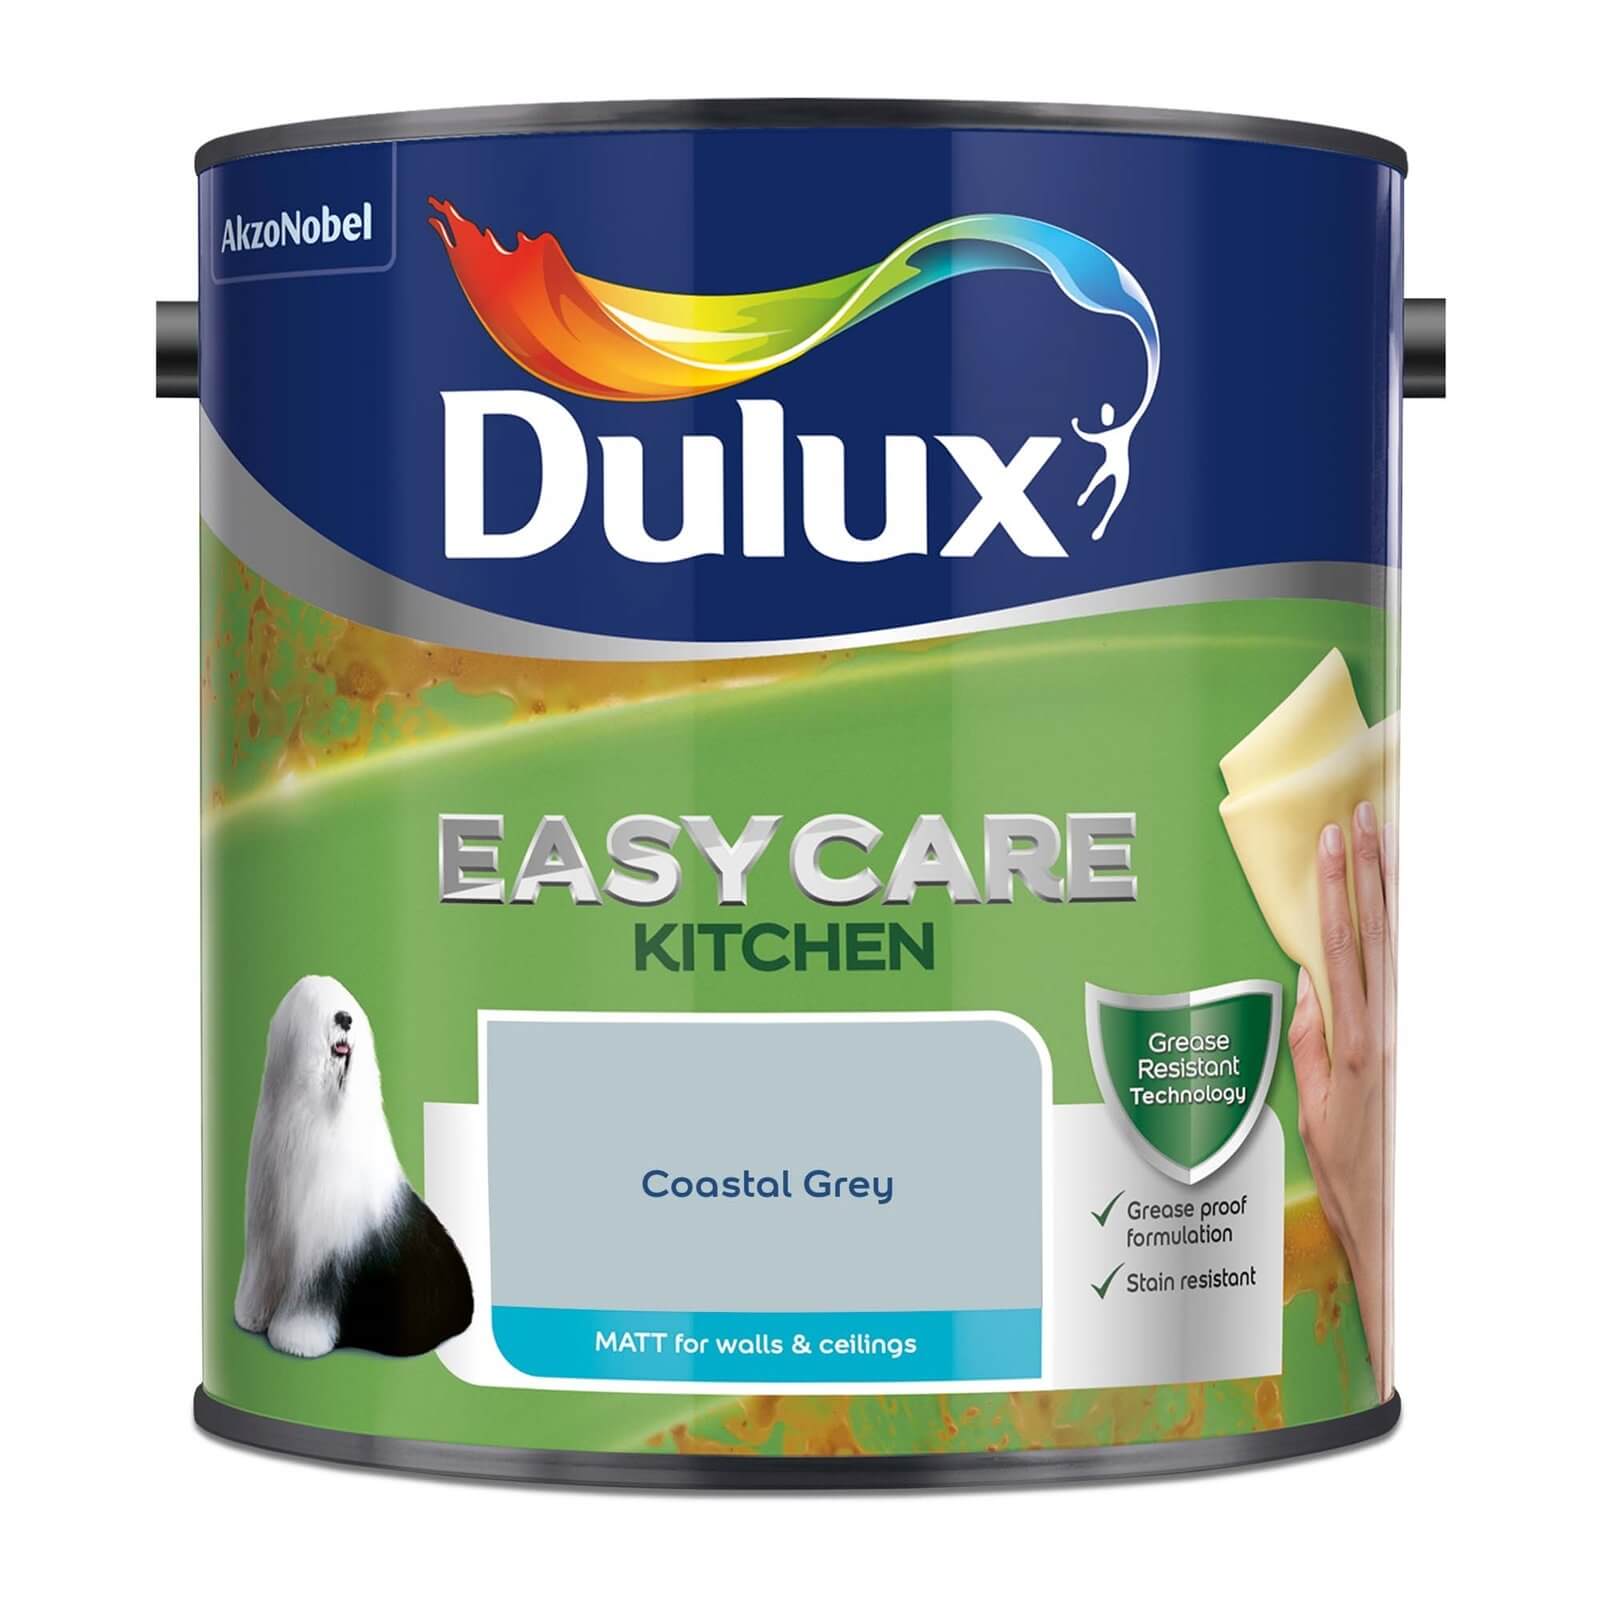 Dulux Easycare Kitchen Coastal Grey Matt Paint - 2.5L